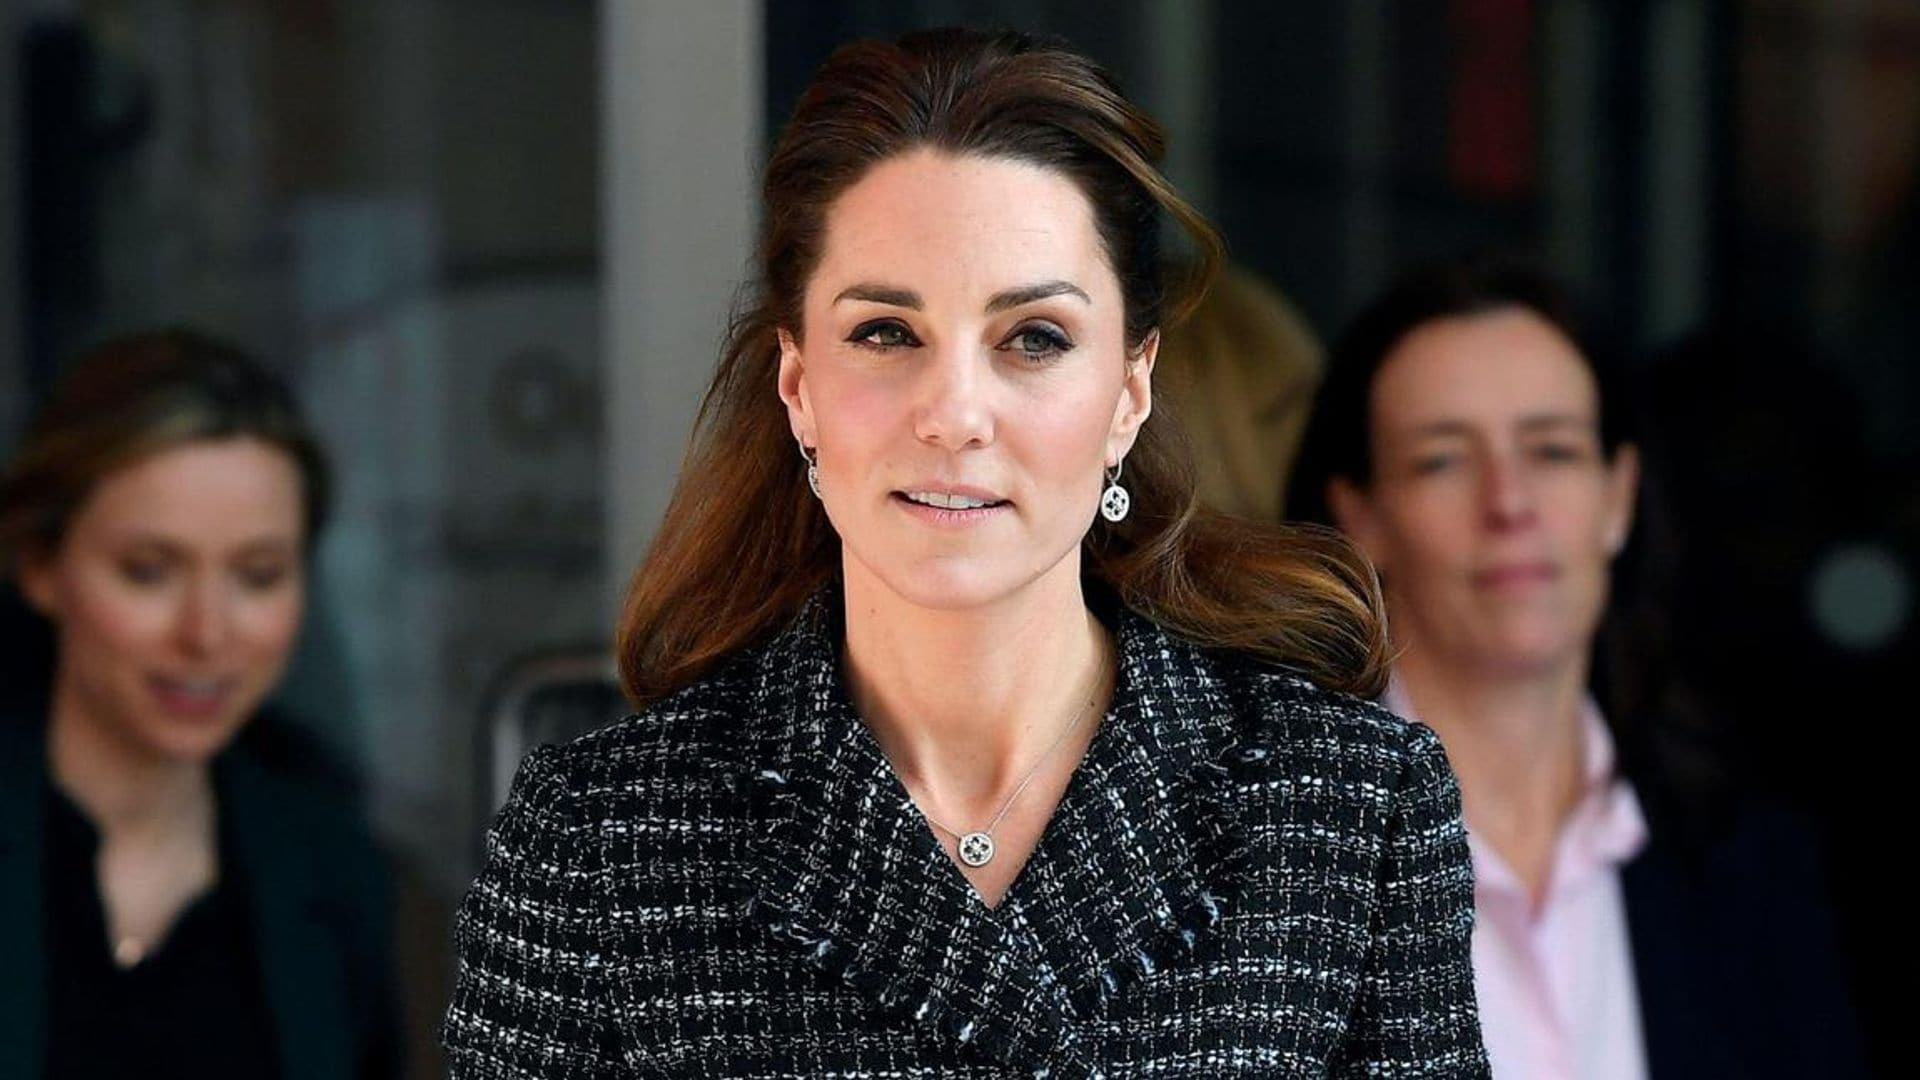 Kate Middleton left her engagement ring behind for the hospital visit